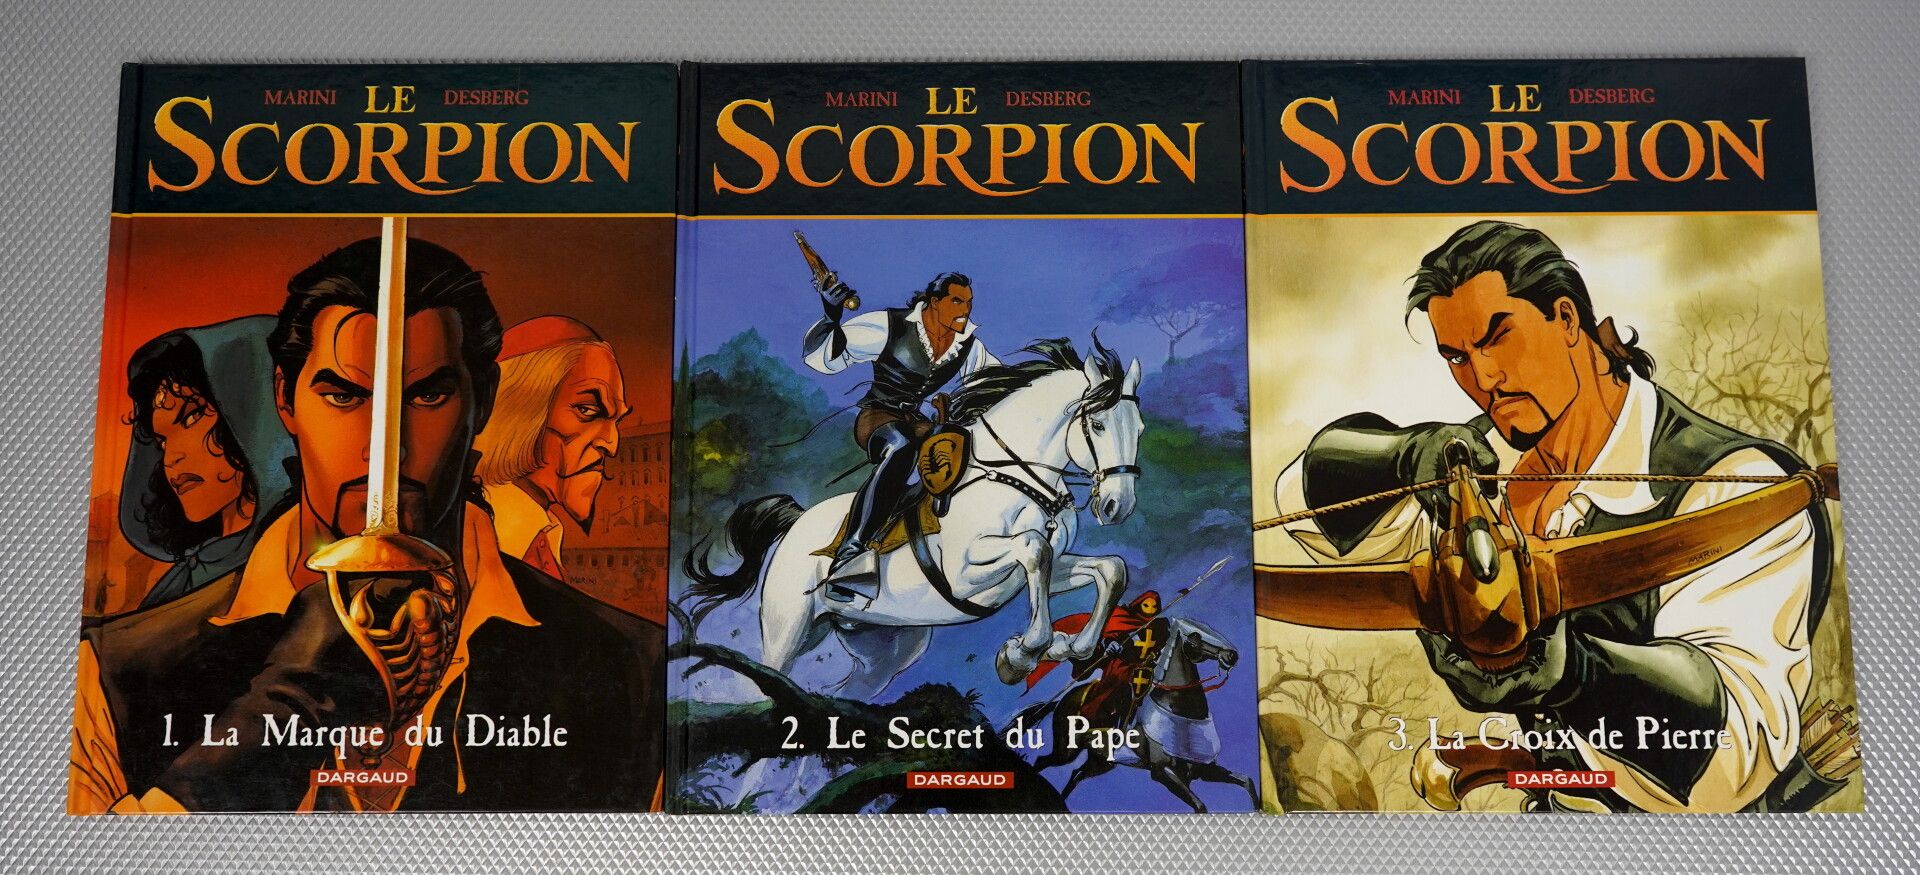 Null Le Scorpion (Marini et Desberg). 13 albums.



Les 13 tomes de la saga, tou&hellip;